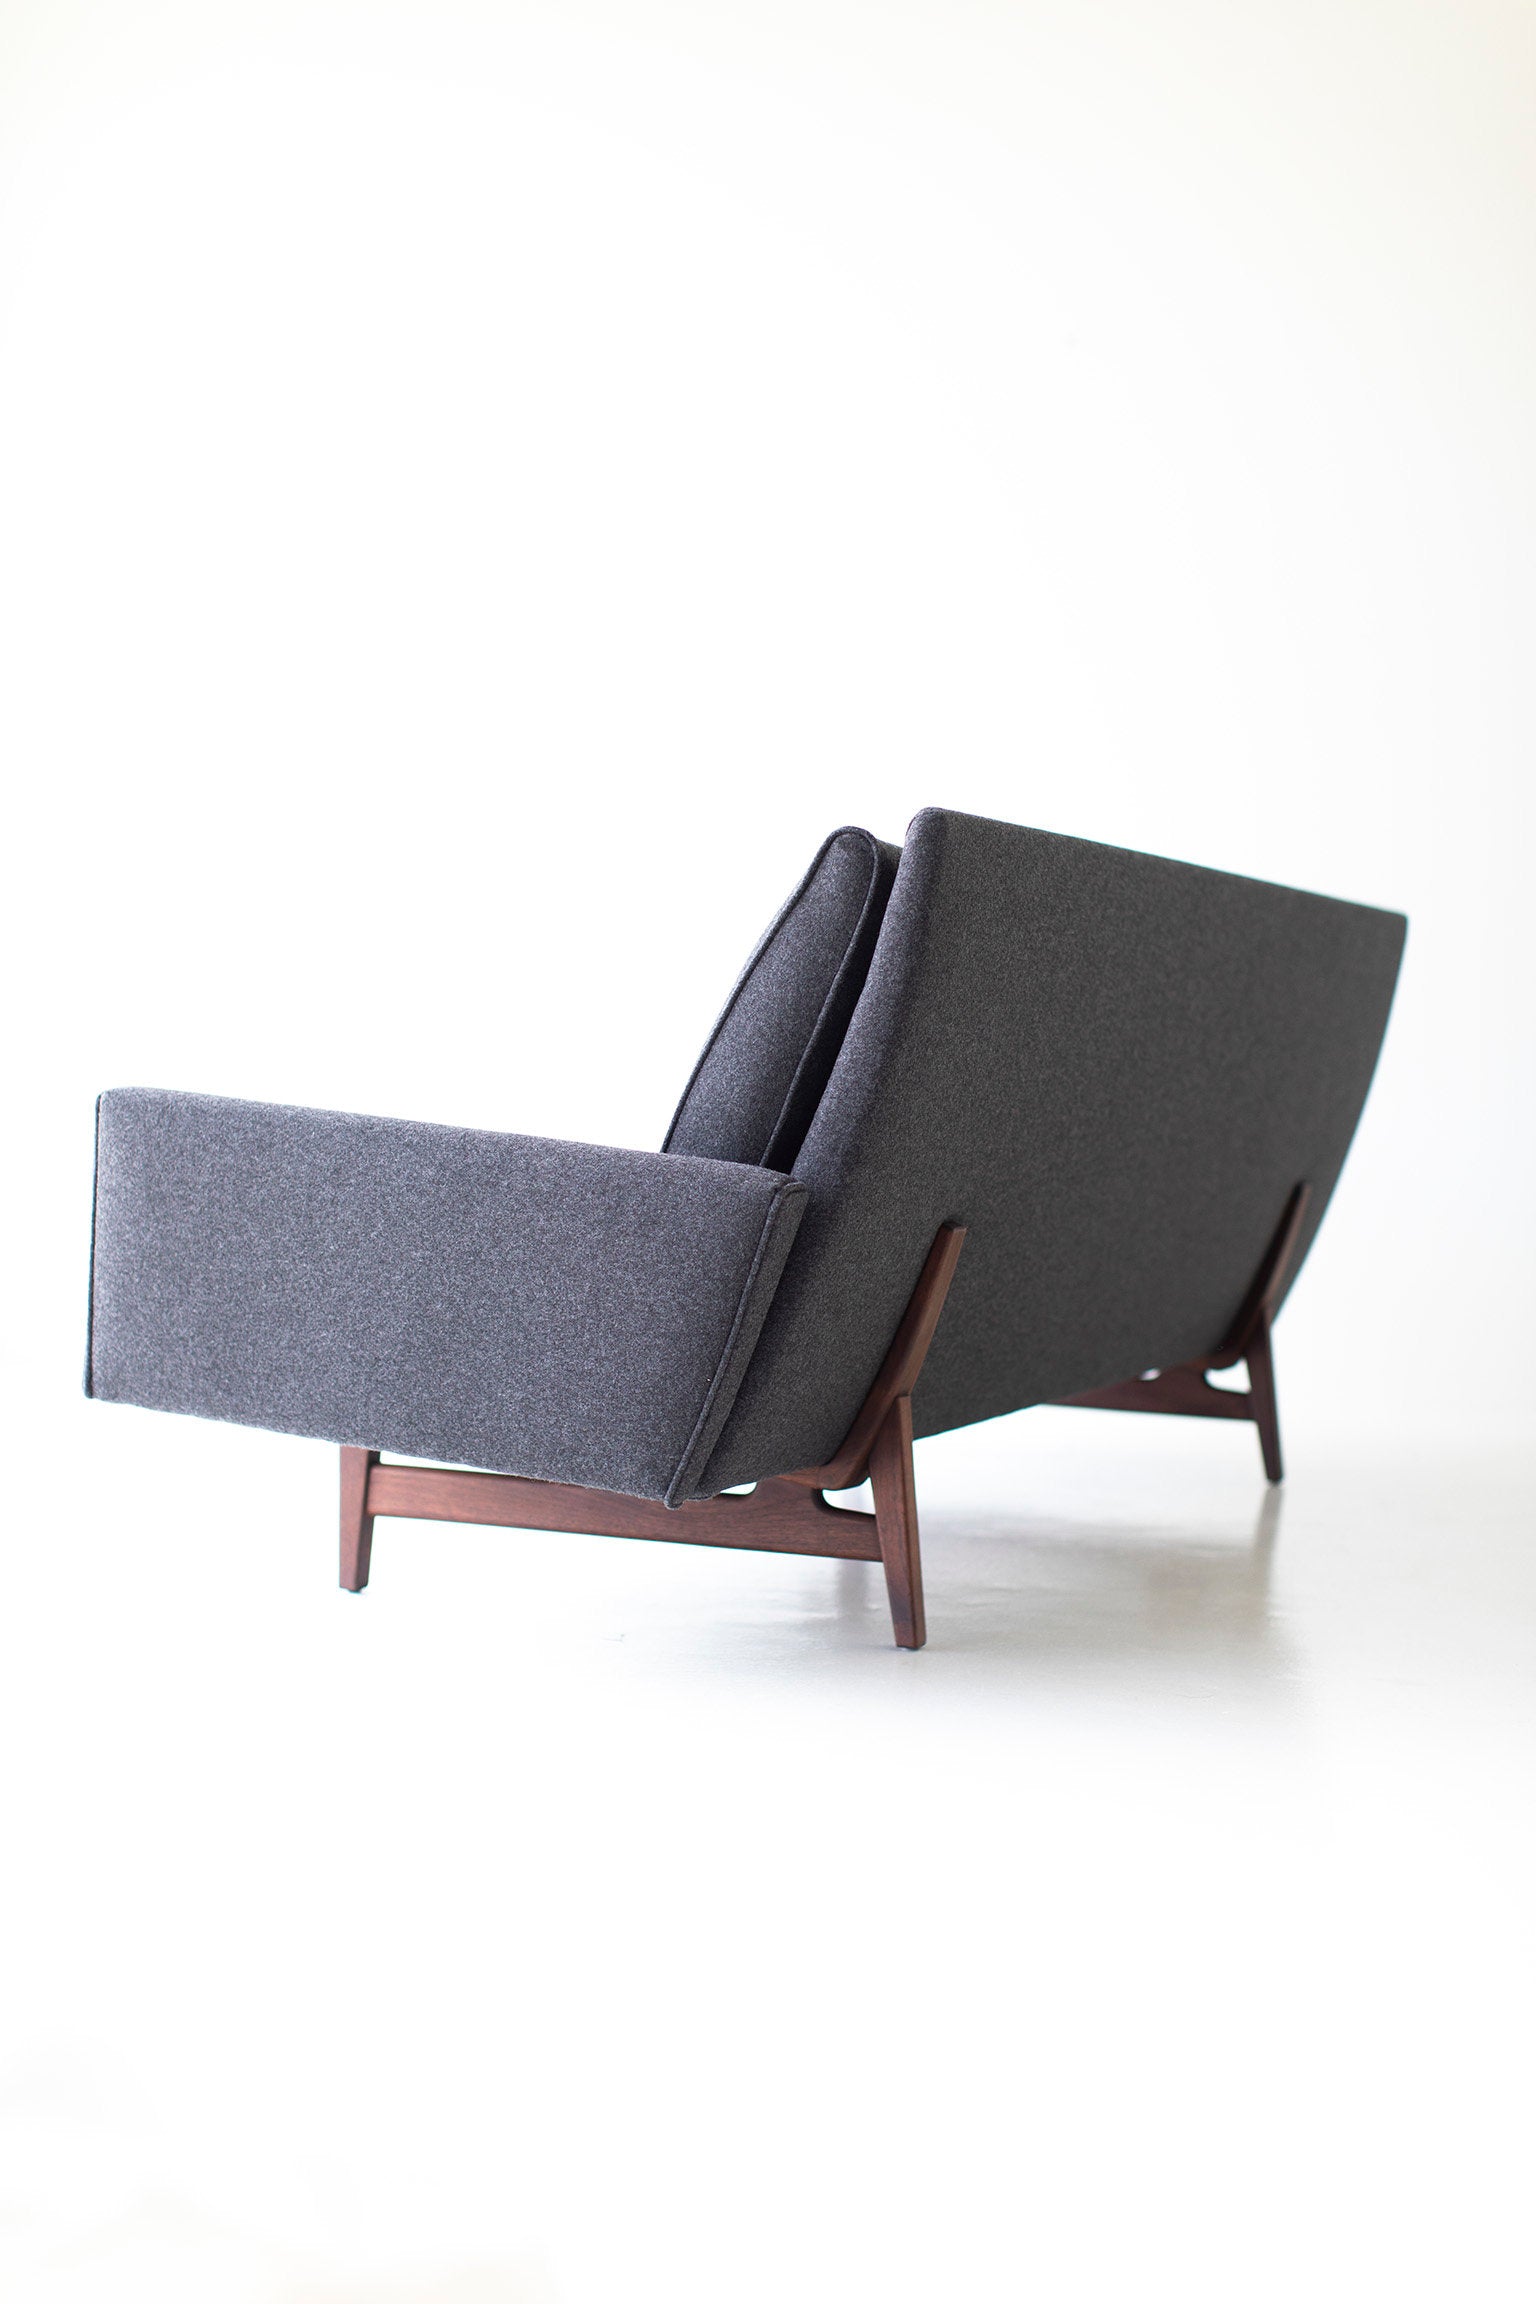 Jens Risom Sofa for Risom Design Inc. - 05211801